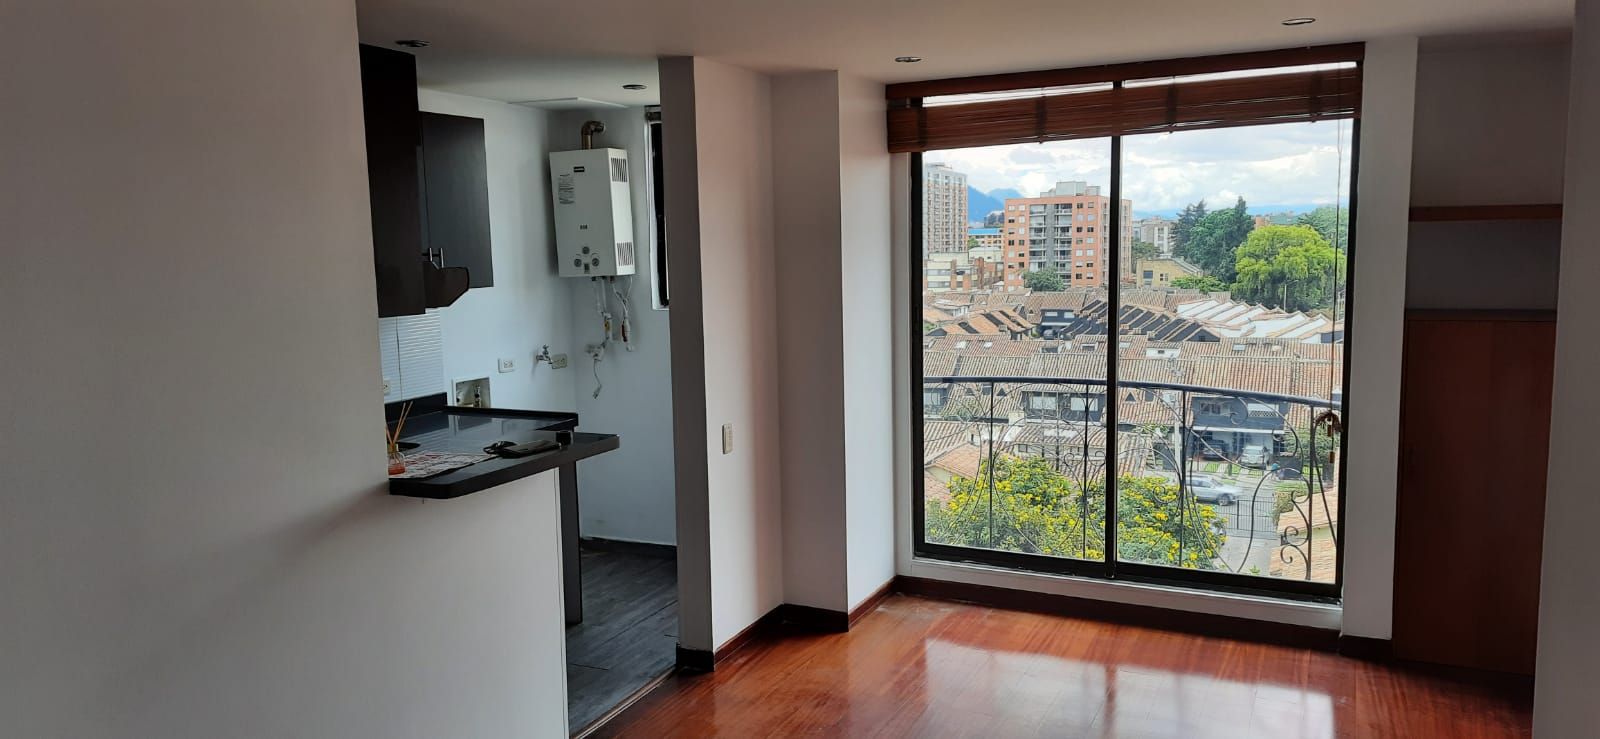 Apartamento en arriendo Acacias Usaquén 50 m² - $ 2.200.000